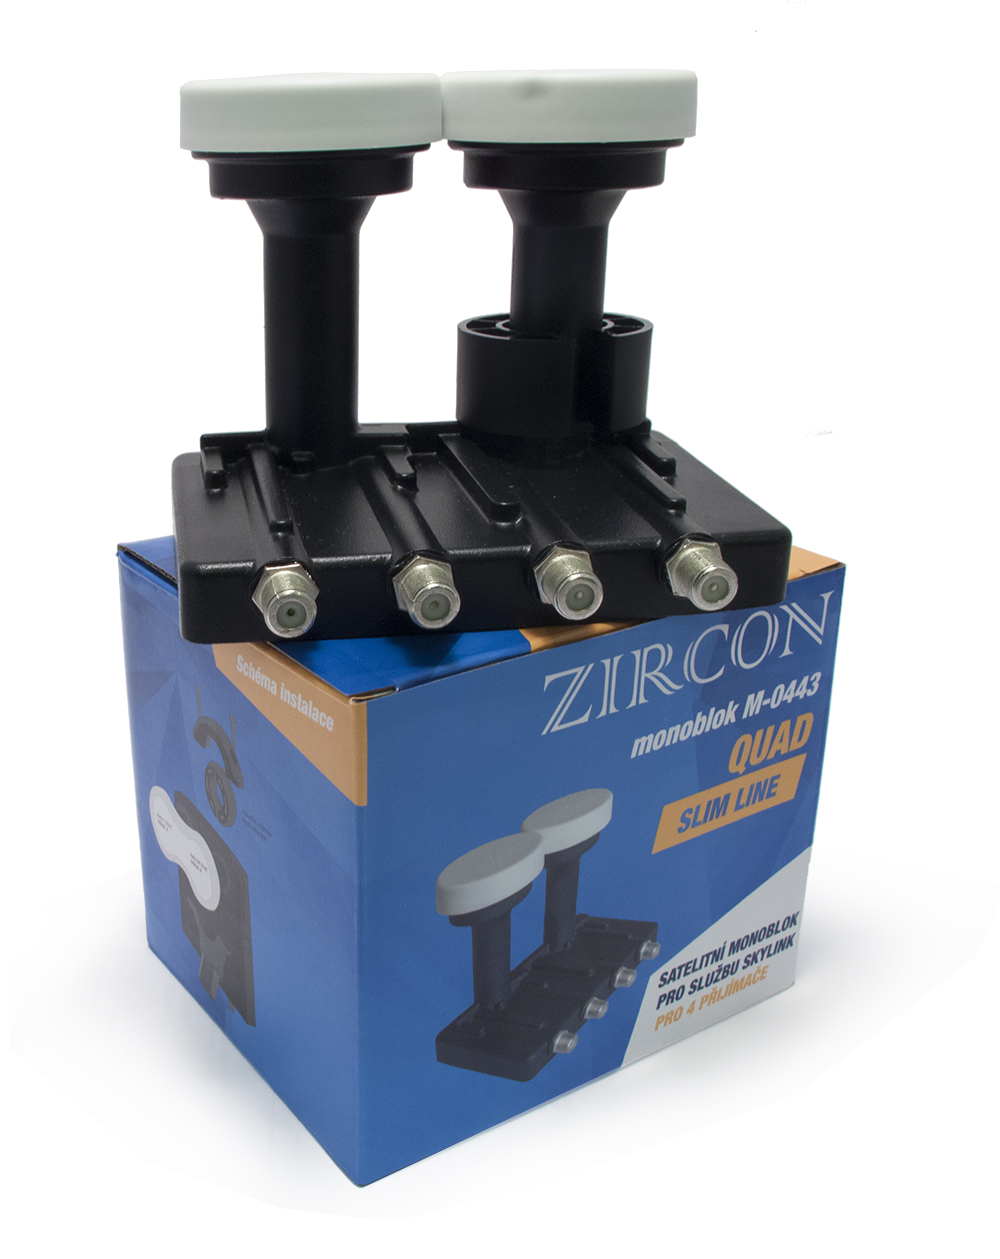 Zircon konvertor Monoblock Quad M-0443 Skylink Slim line 8594163274771